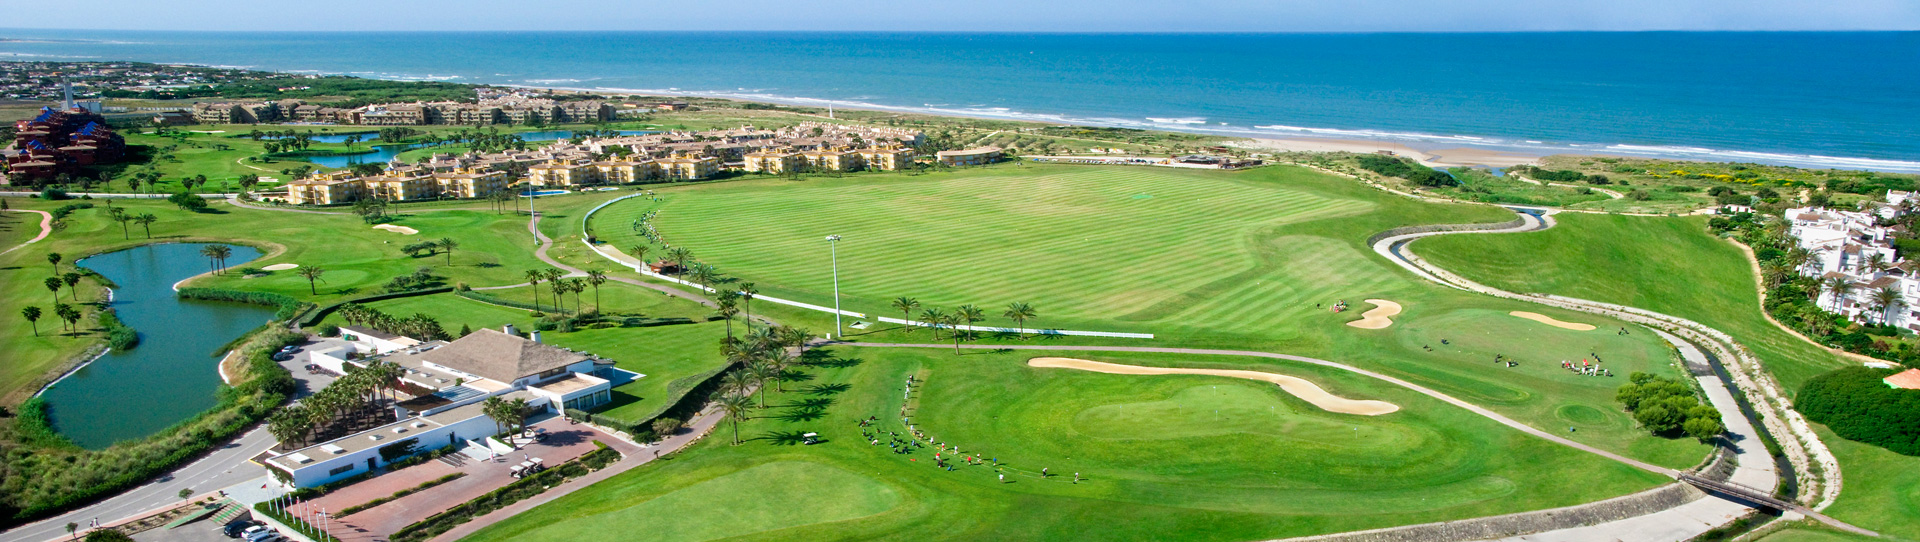 Spain golf courses - Costa Ballena Golf Club - Photo 2